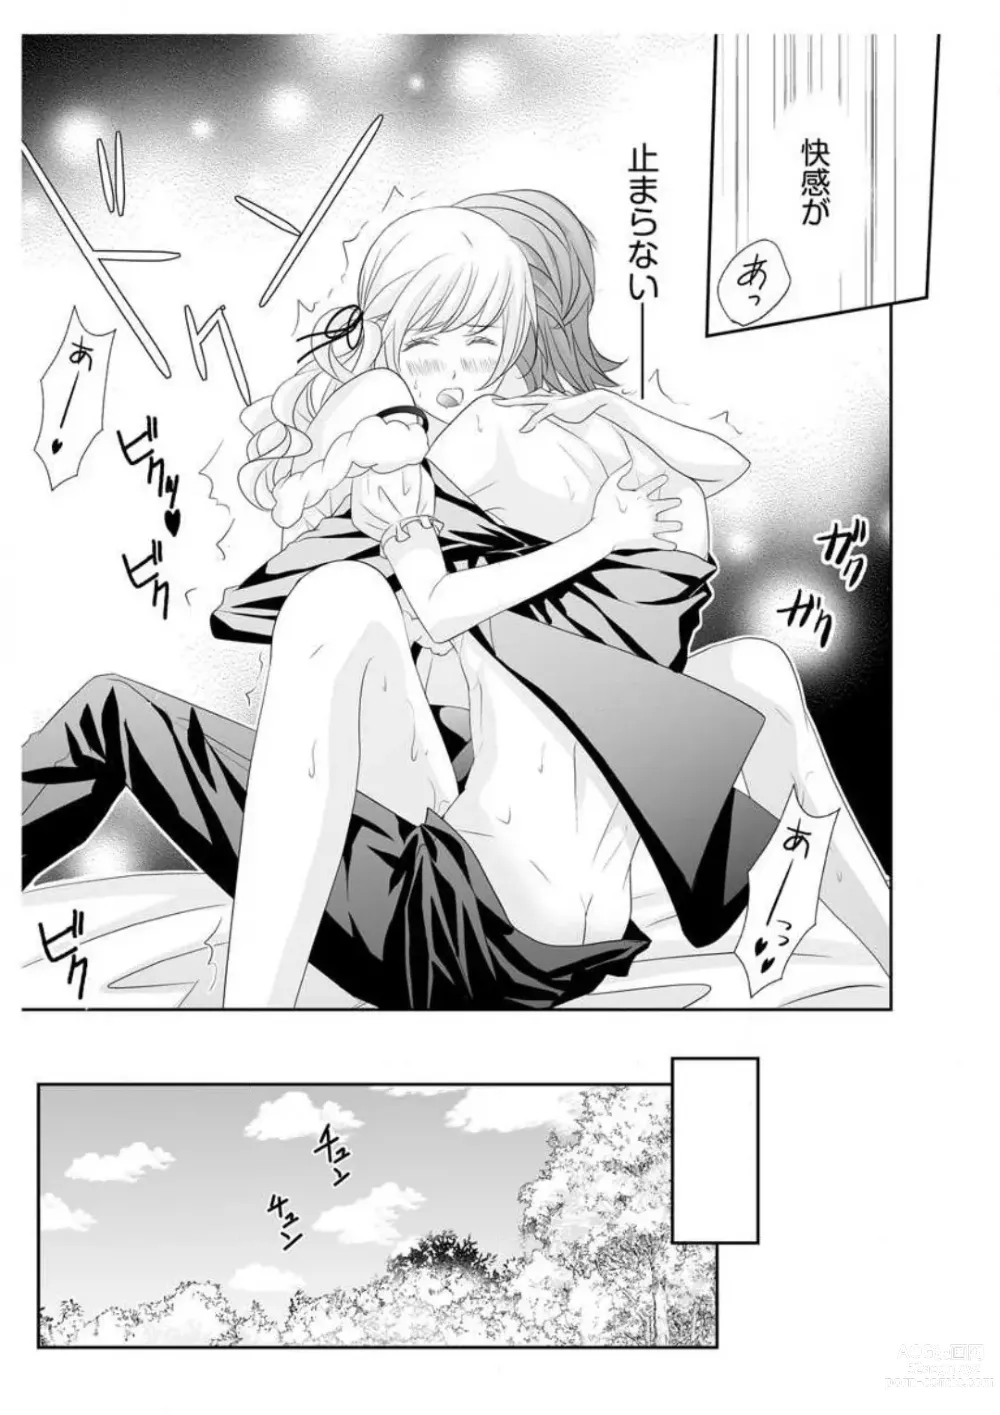 Page 236 of manga Ero ◆ Meruhen Aoi Tori 1-10